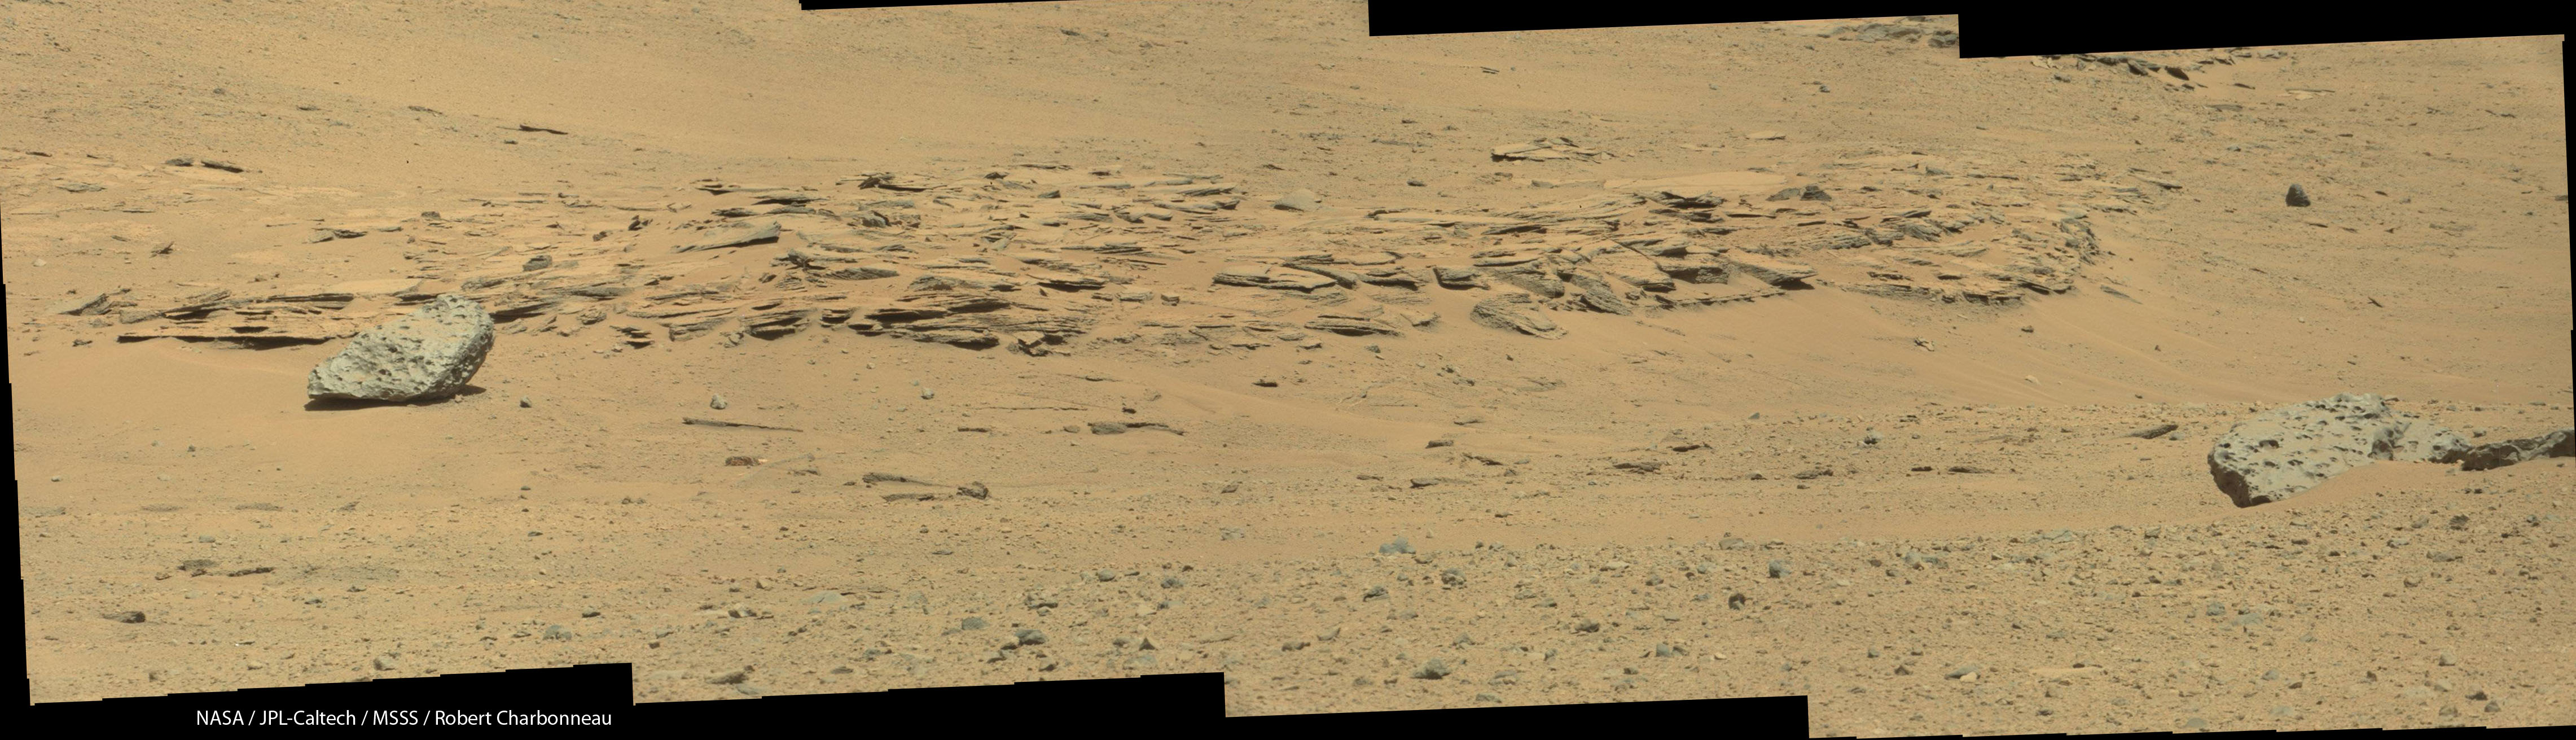 MARS: CURIOSITY u krateru  GALE  - Page 8 Index